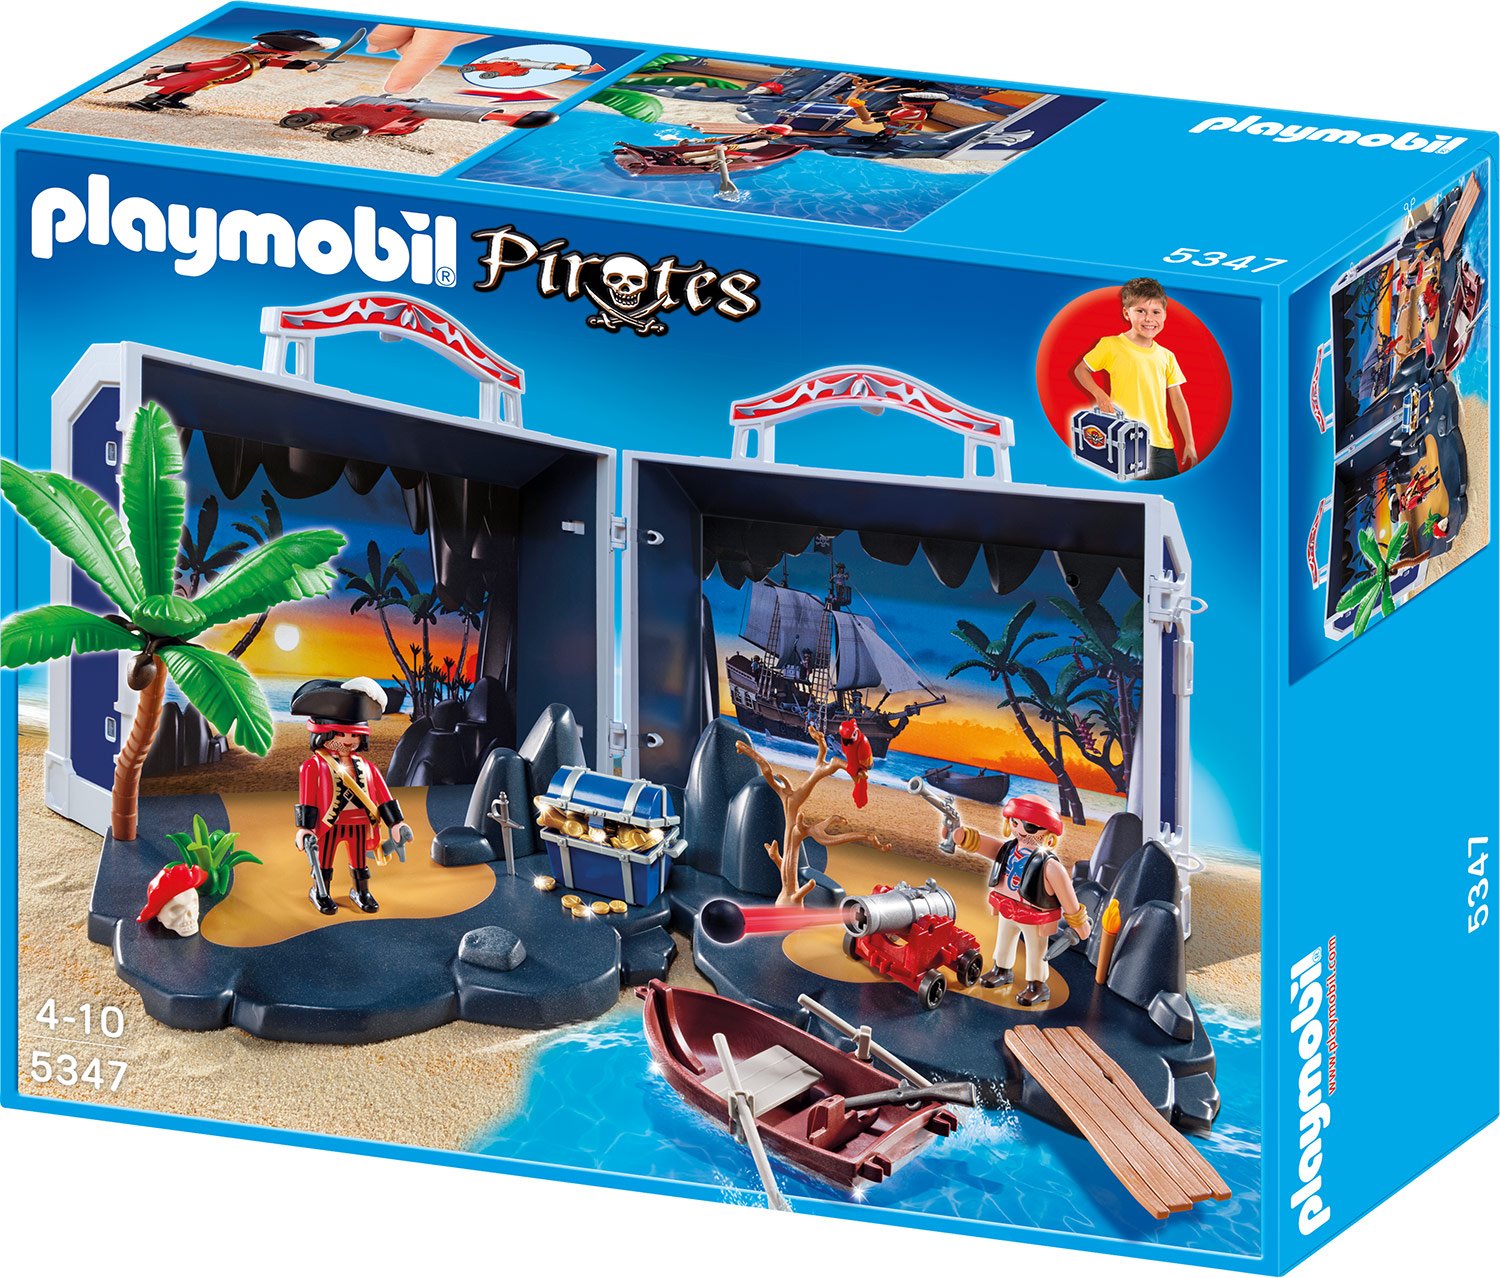 Playmobil Pirates Take Along Treasure Chest